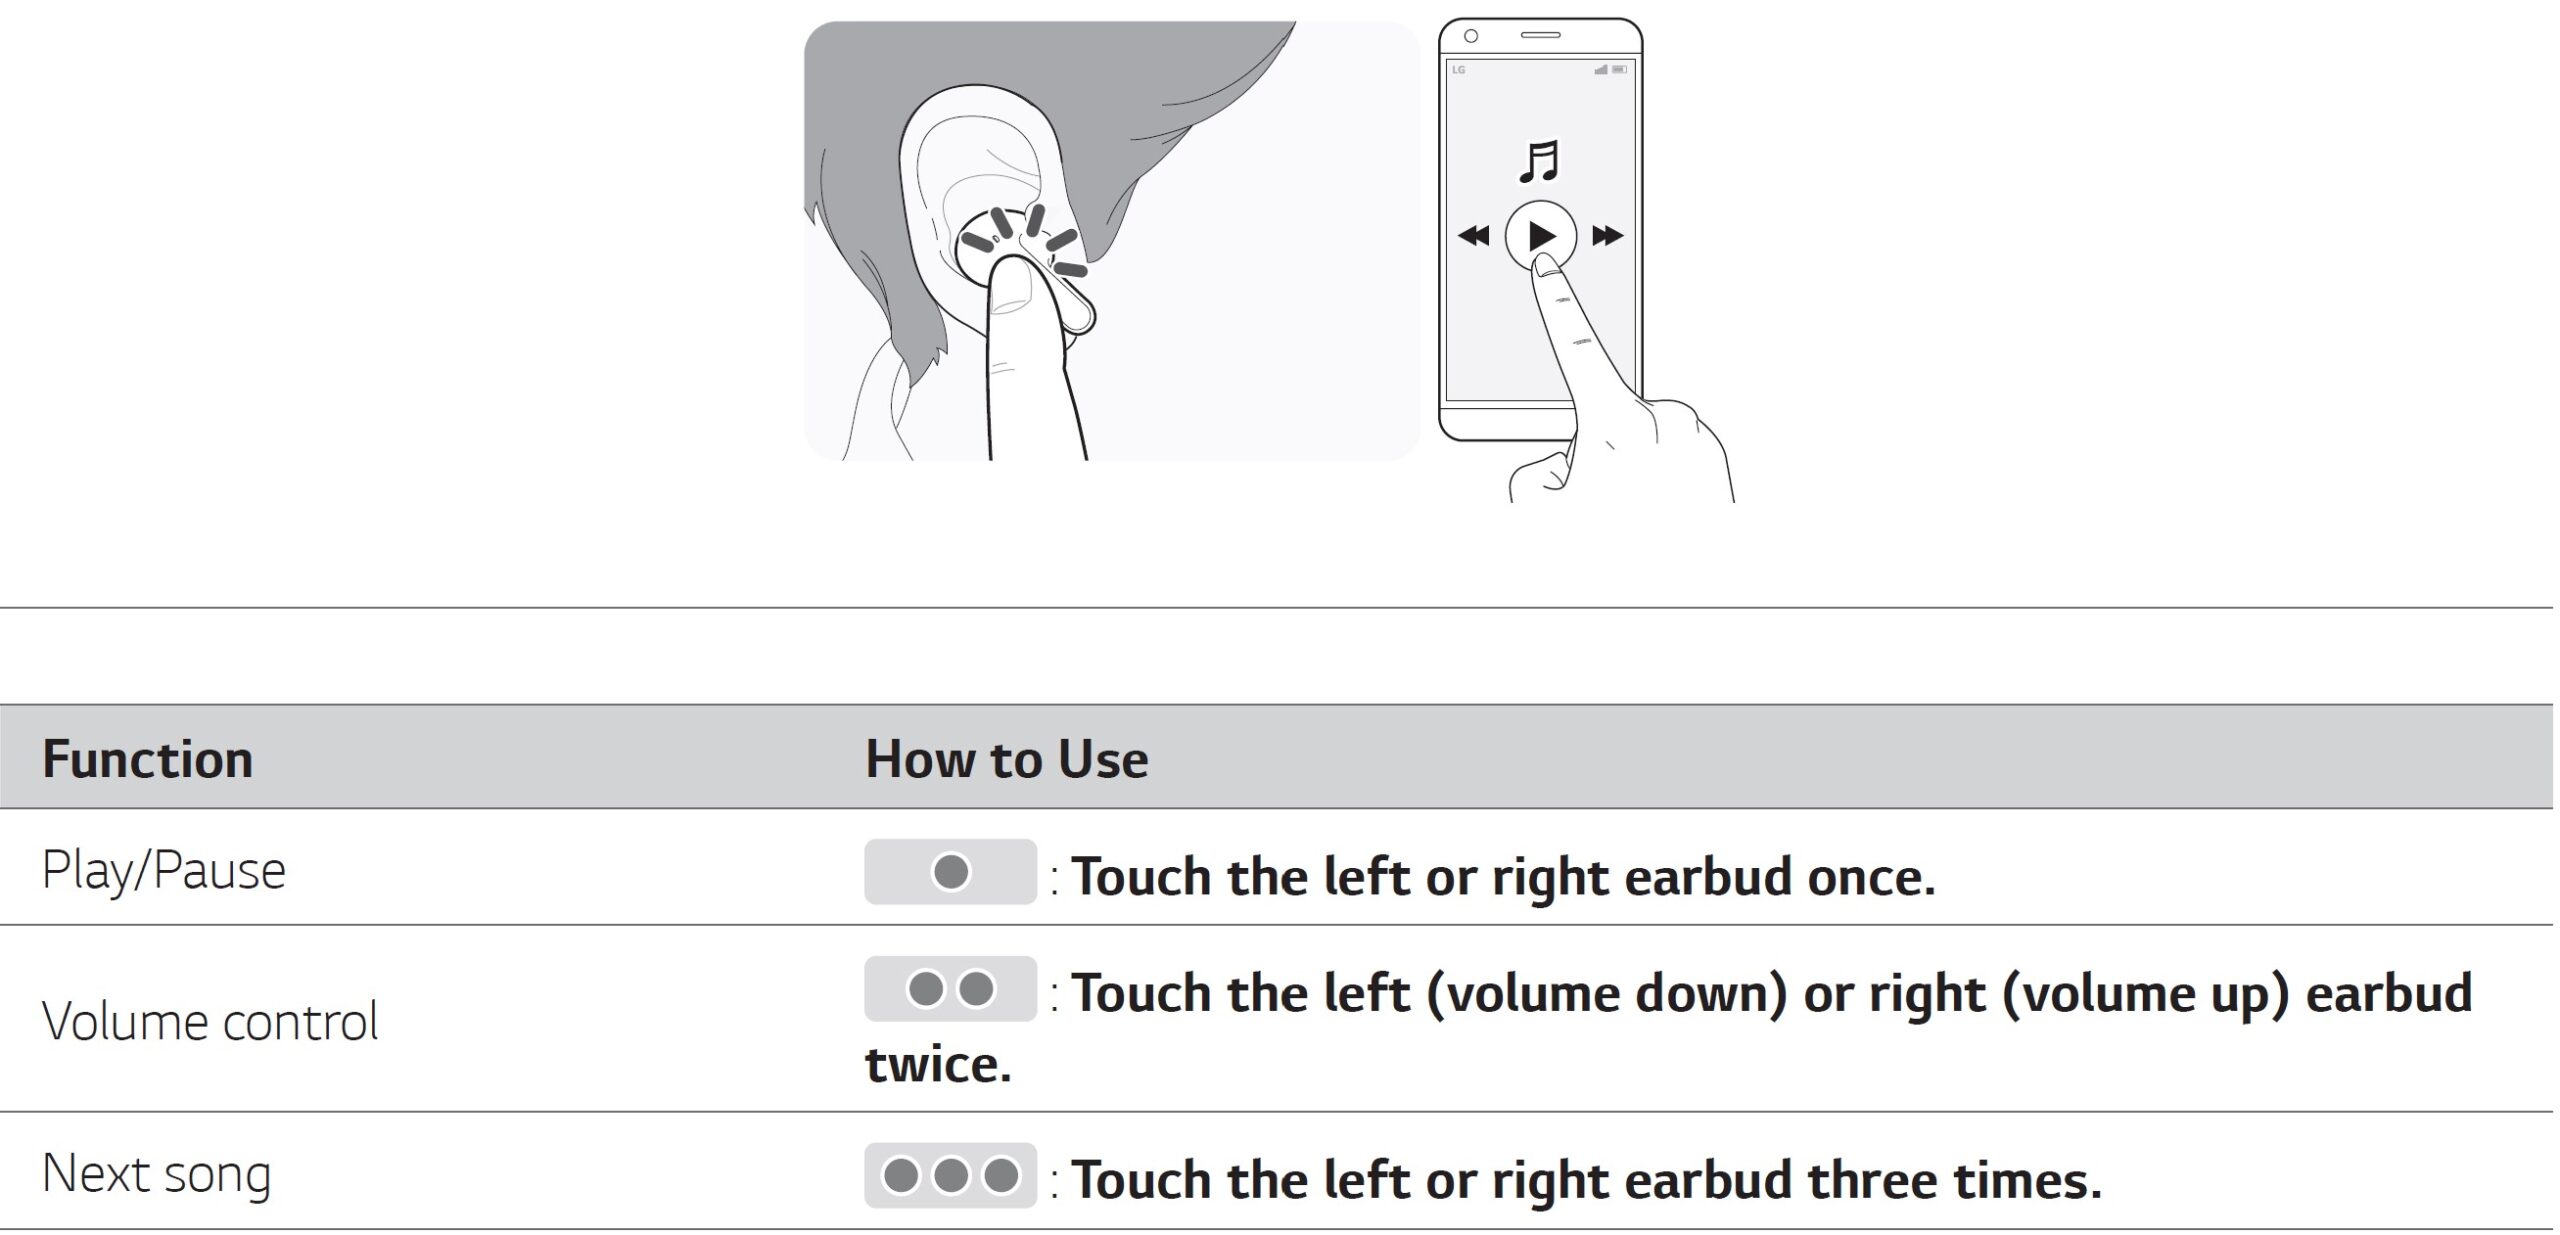 LG-Tone-Free-T90-Wireless-Bluetooth-Earbuds-User-Manual-14